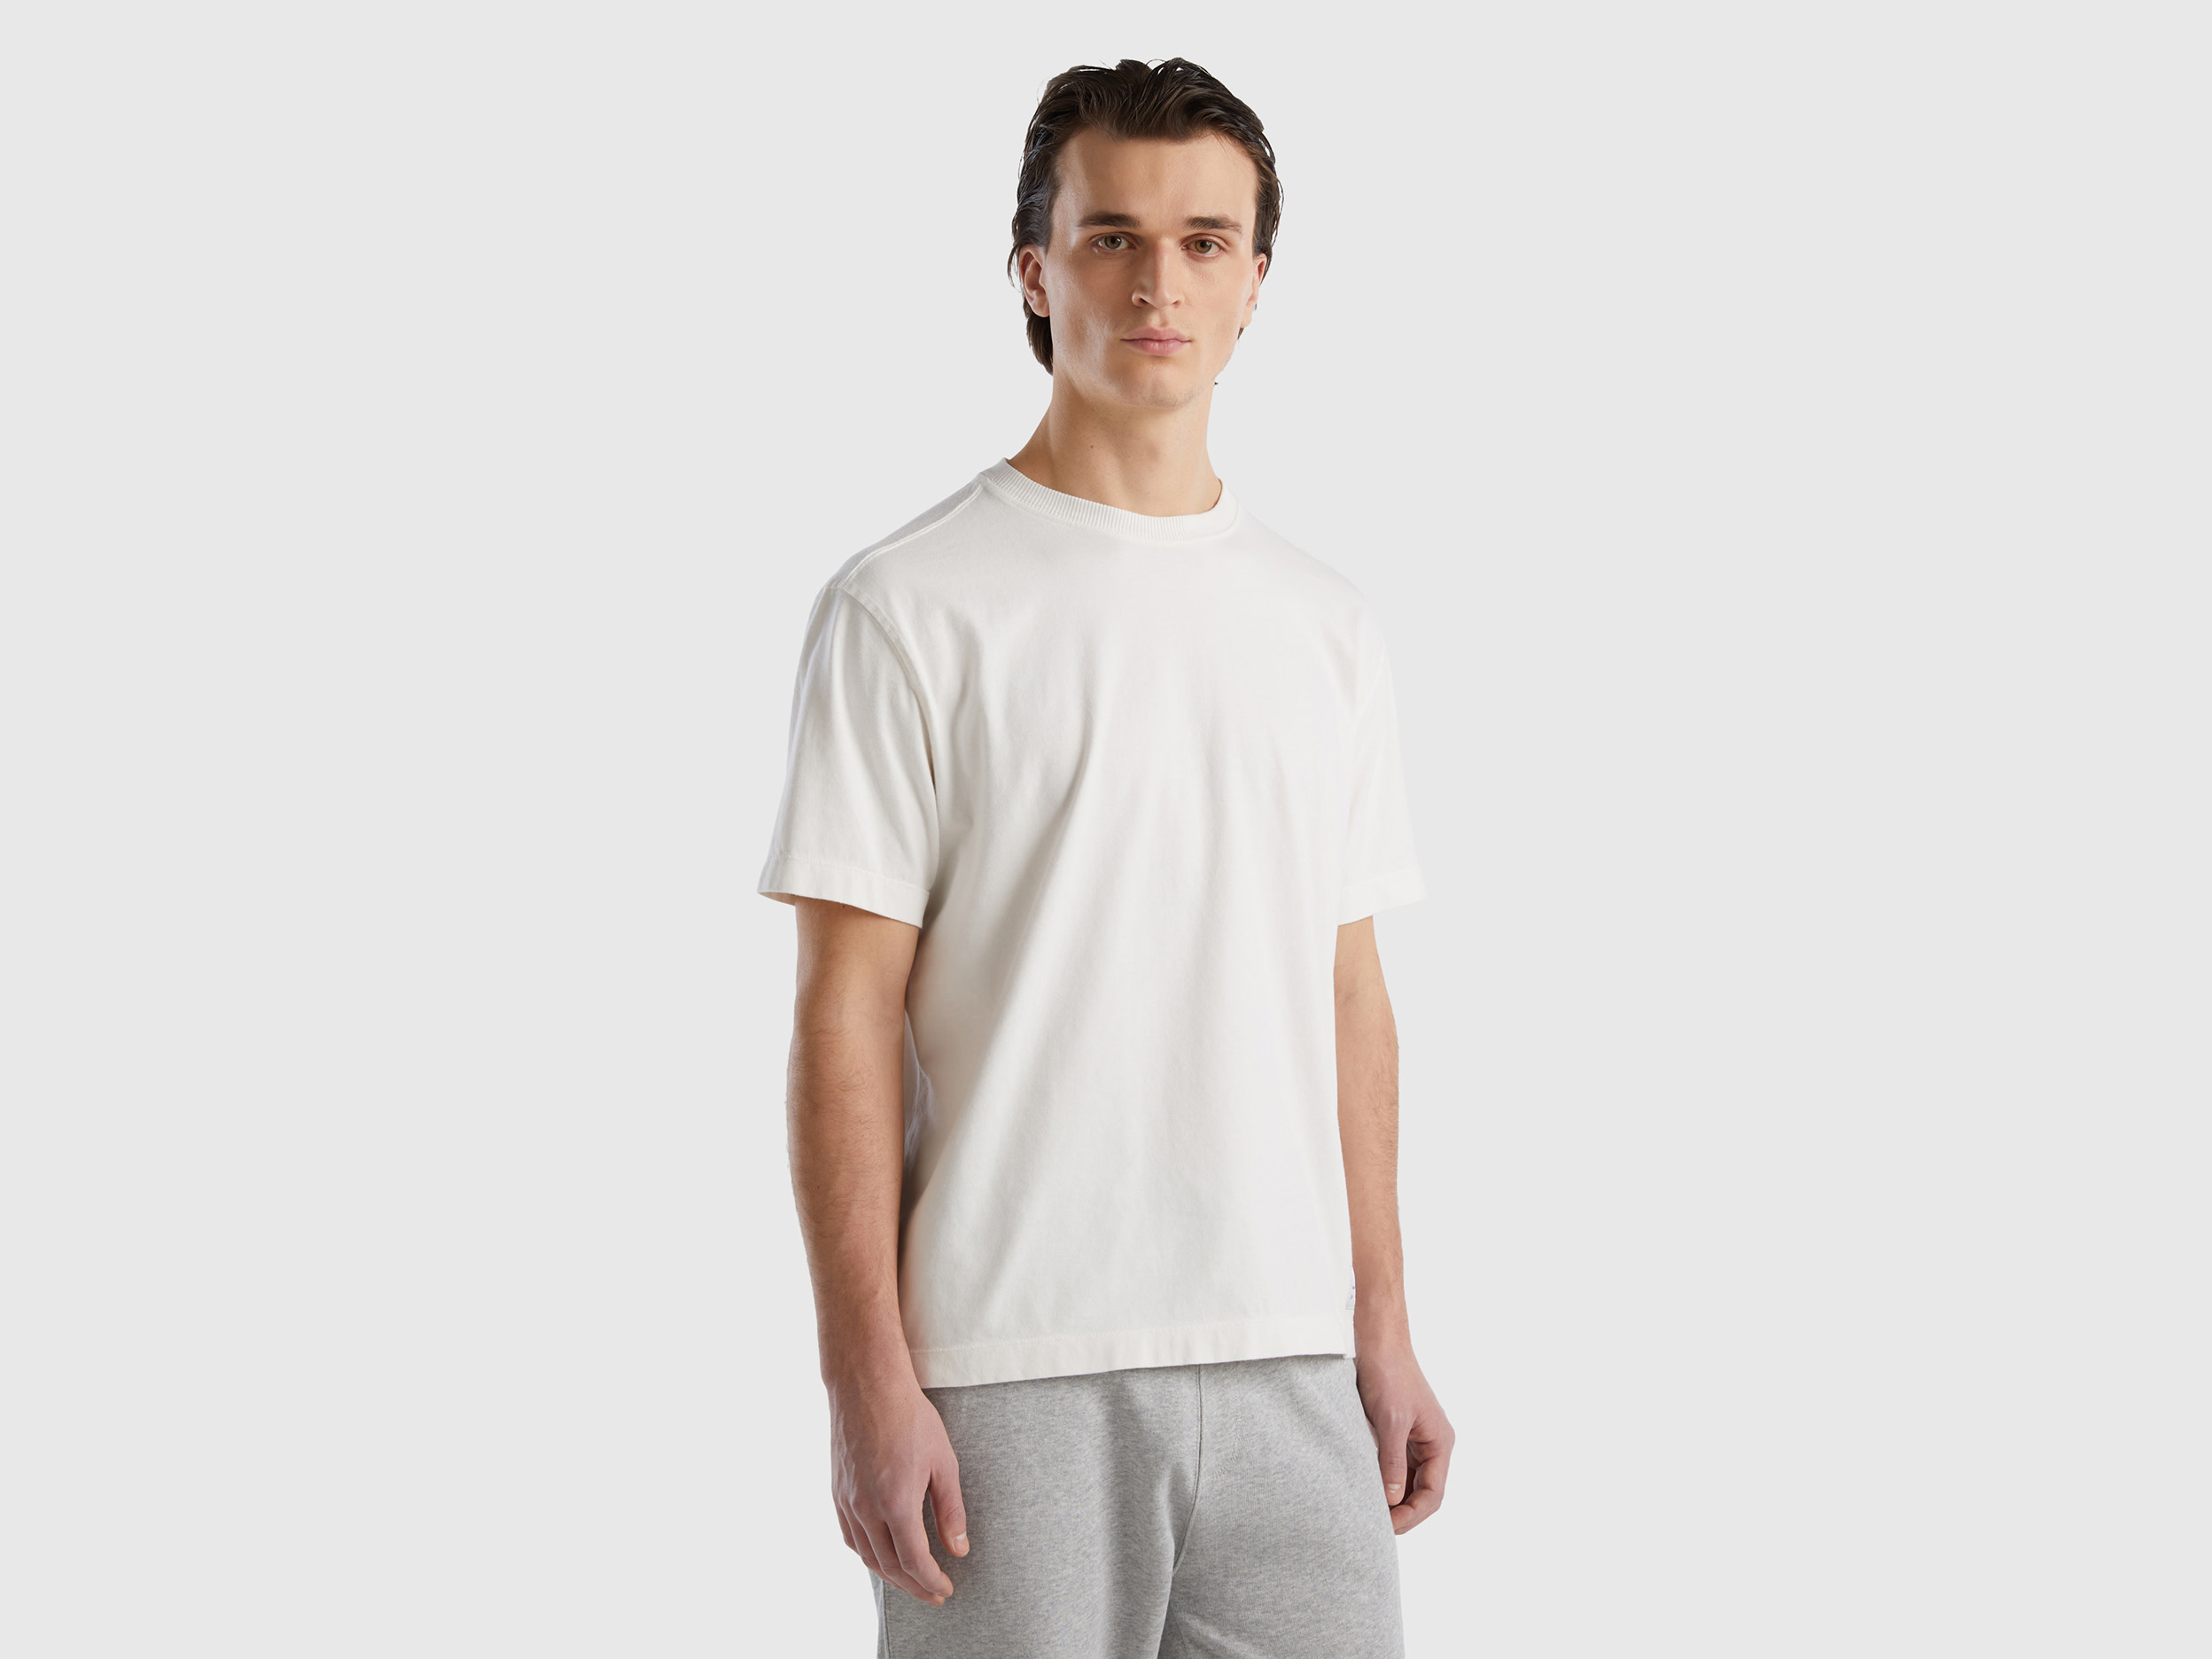 Benetton, 100% Organic Cotton Crew Neck T-shirt, size XS, Creamy White, Men